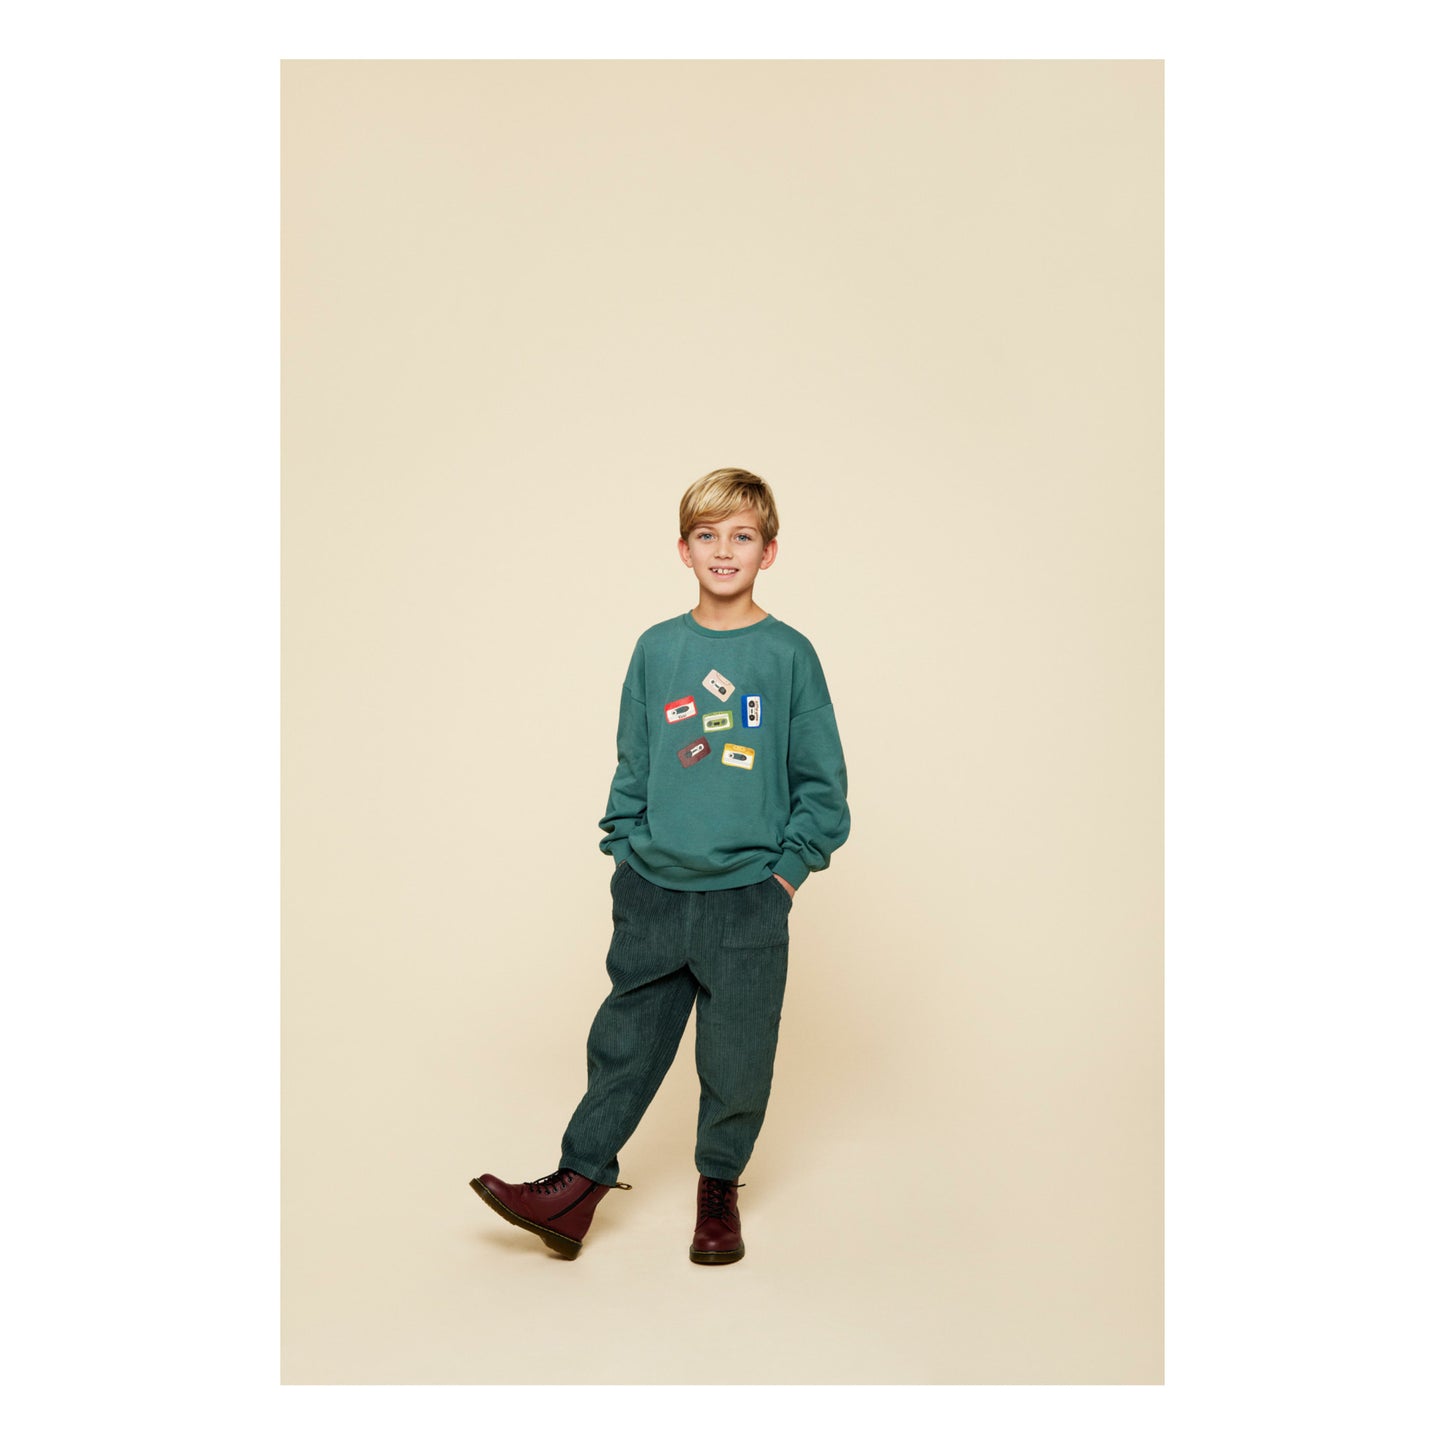 A Monday In Copenhagen Bastian Corduroy Trousers - Chrome green